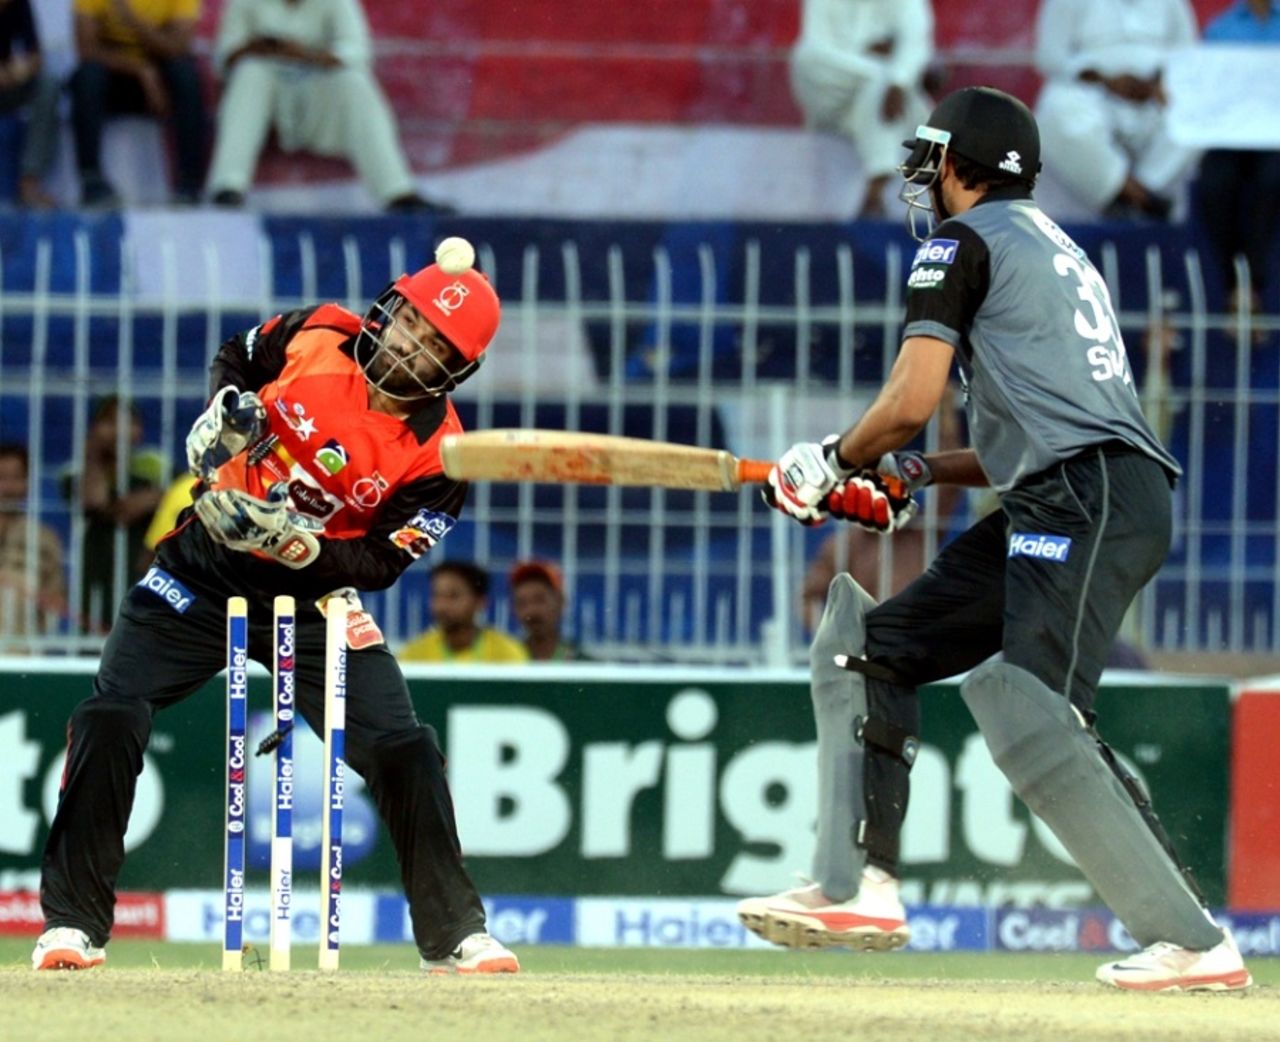 Sohail Tanvir is bowled by Zulfiqar Babar, Balochistan, v Punjab (Pakistan), Pakistan Cup 2016, April 19, 2016